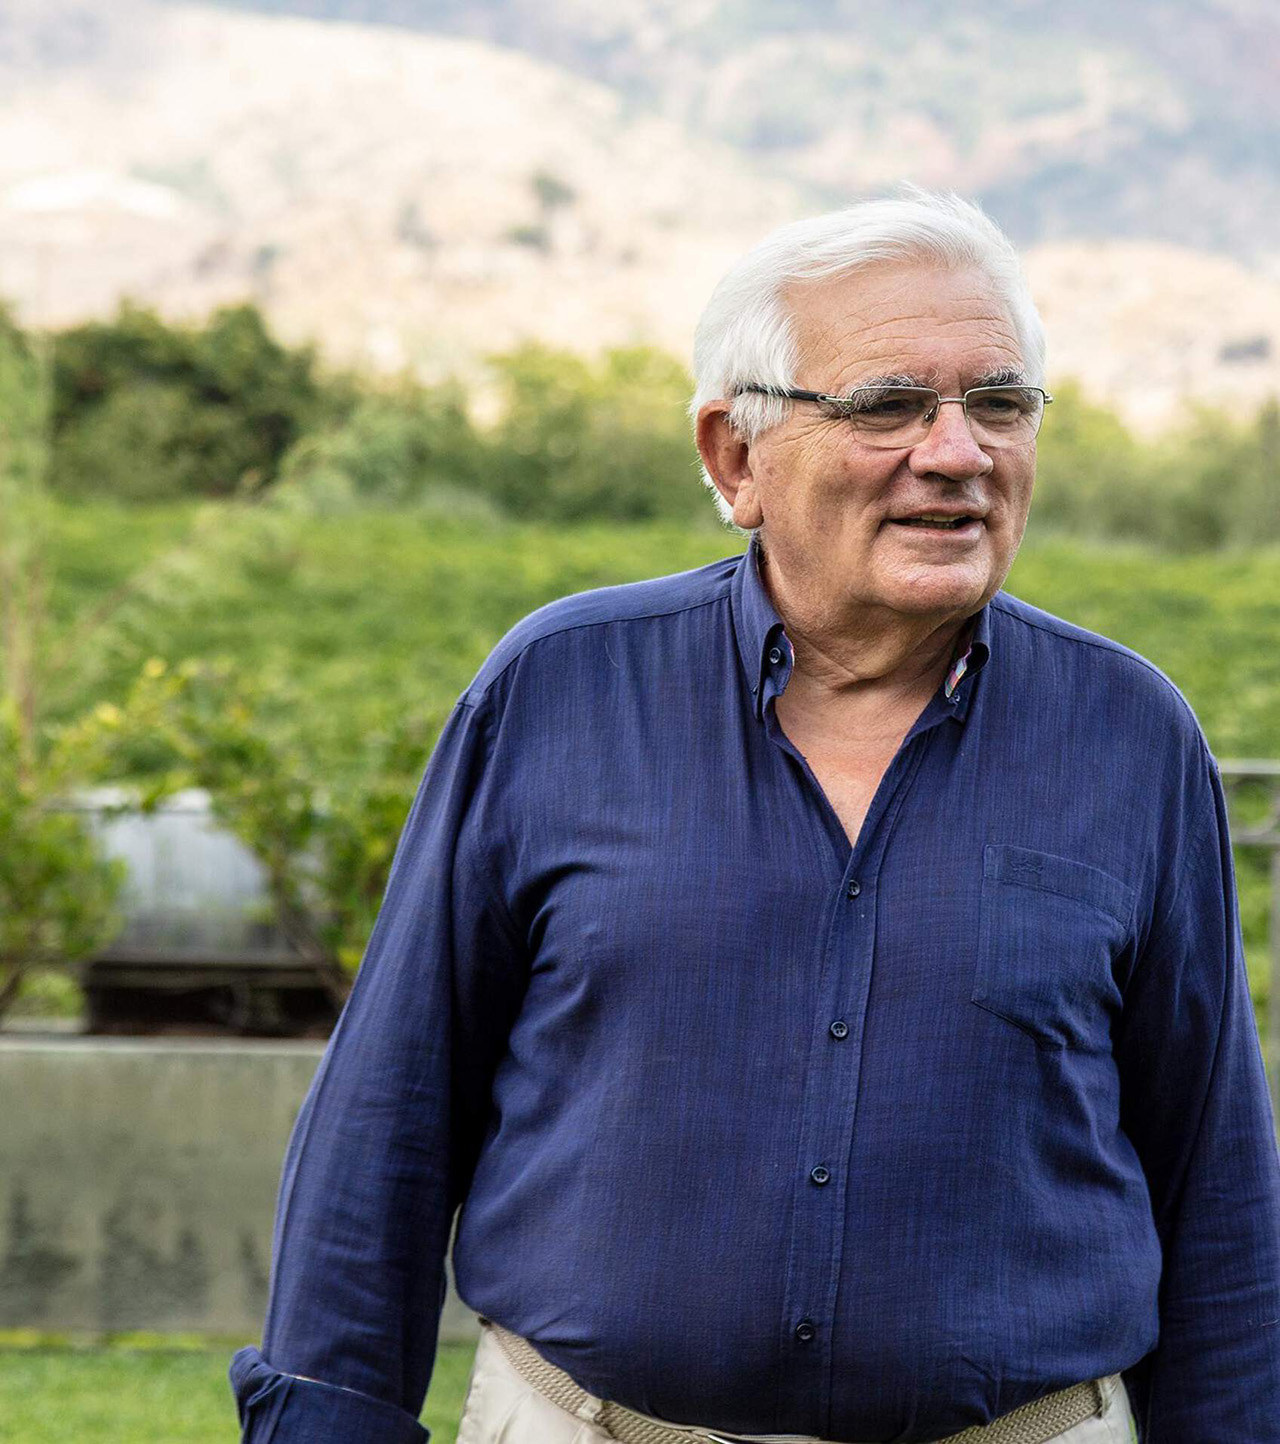 Man wearing blue shirt standing in a vineyard.